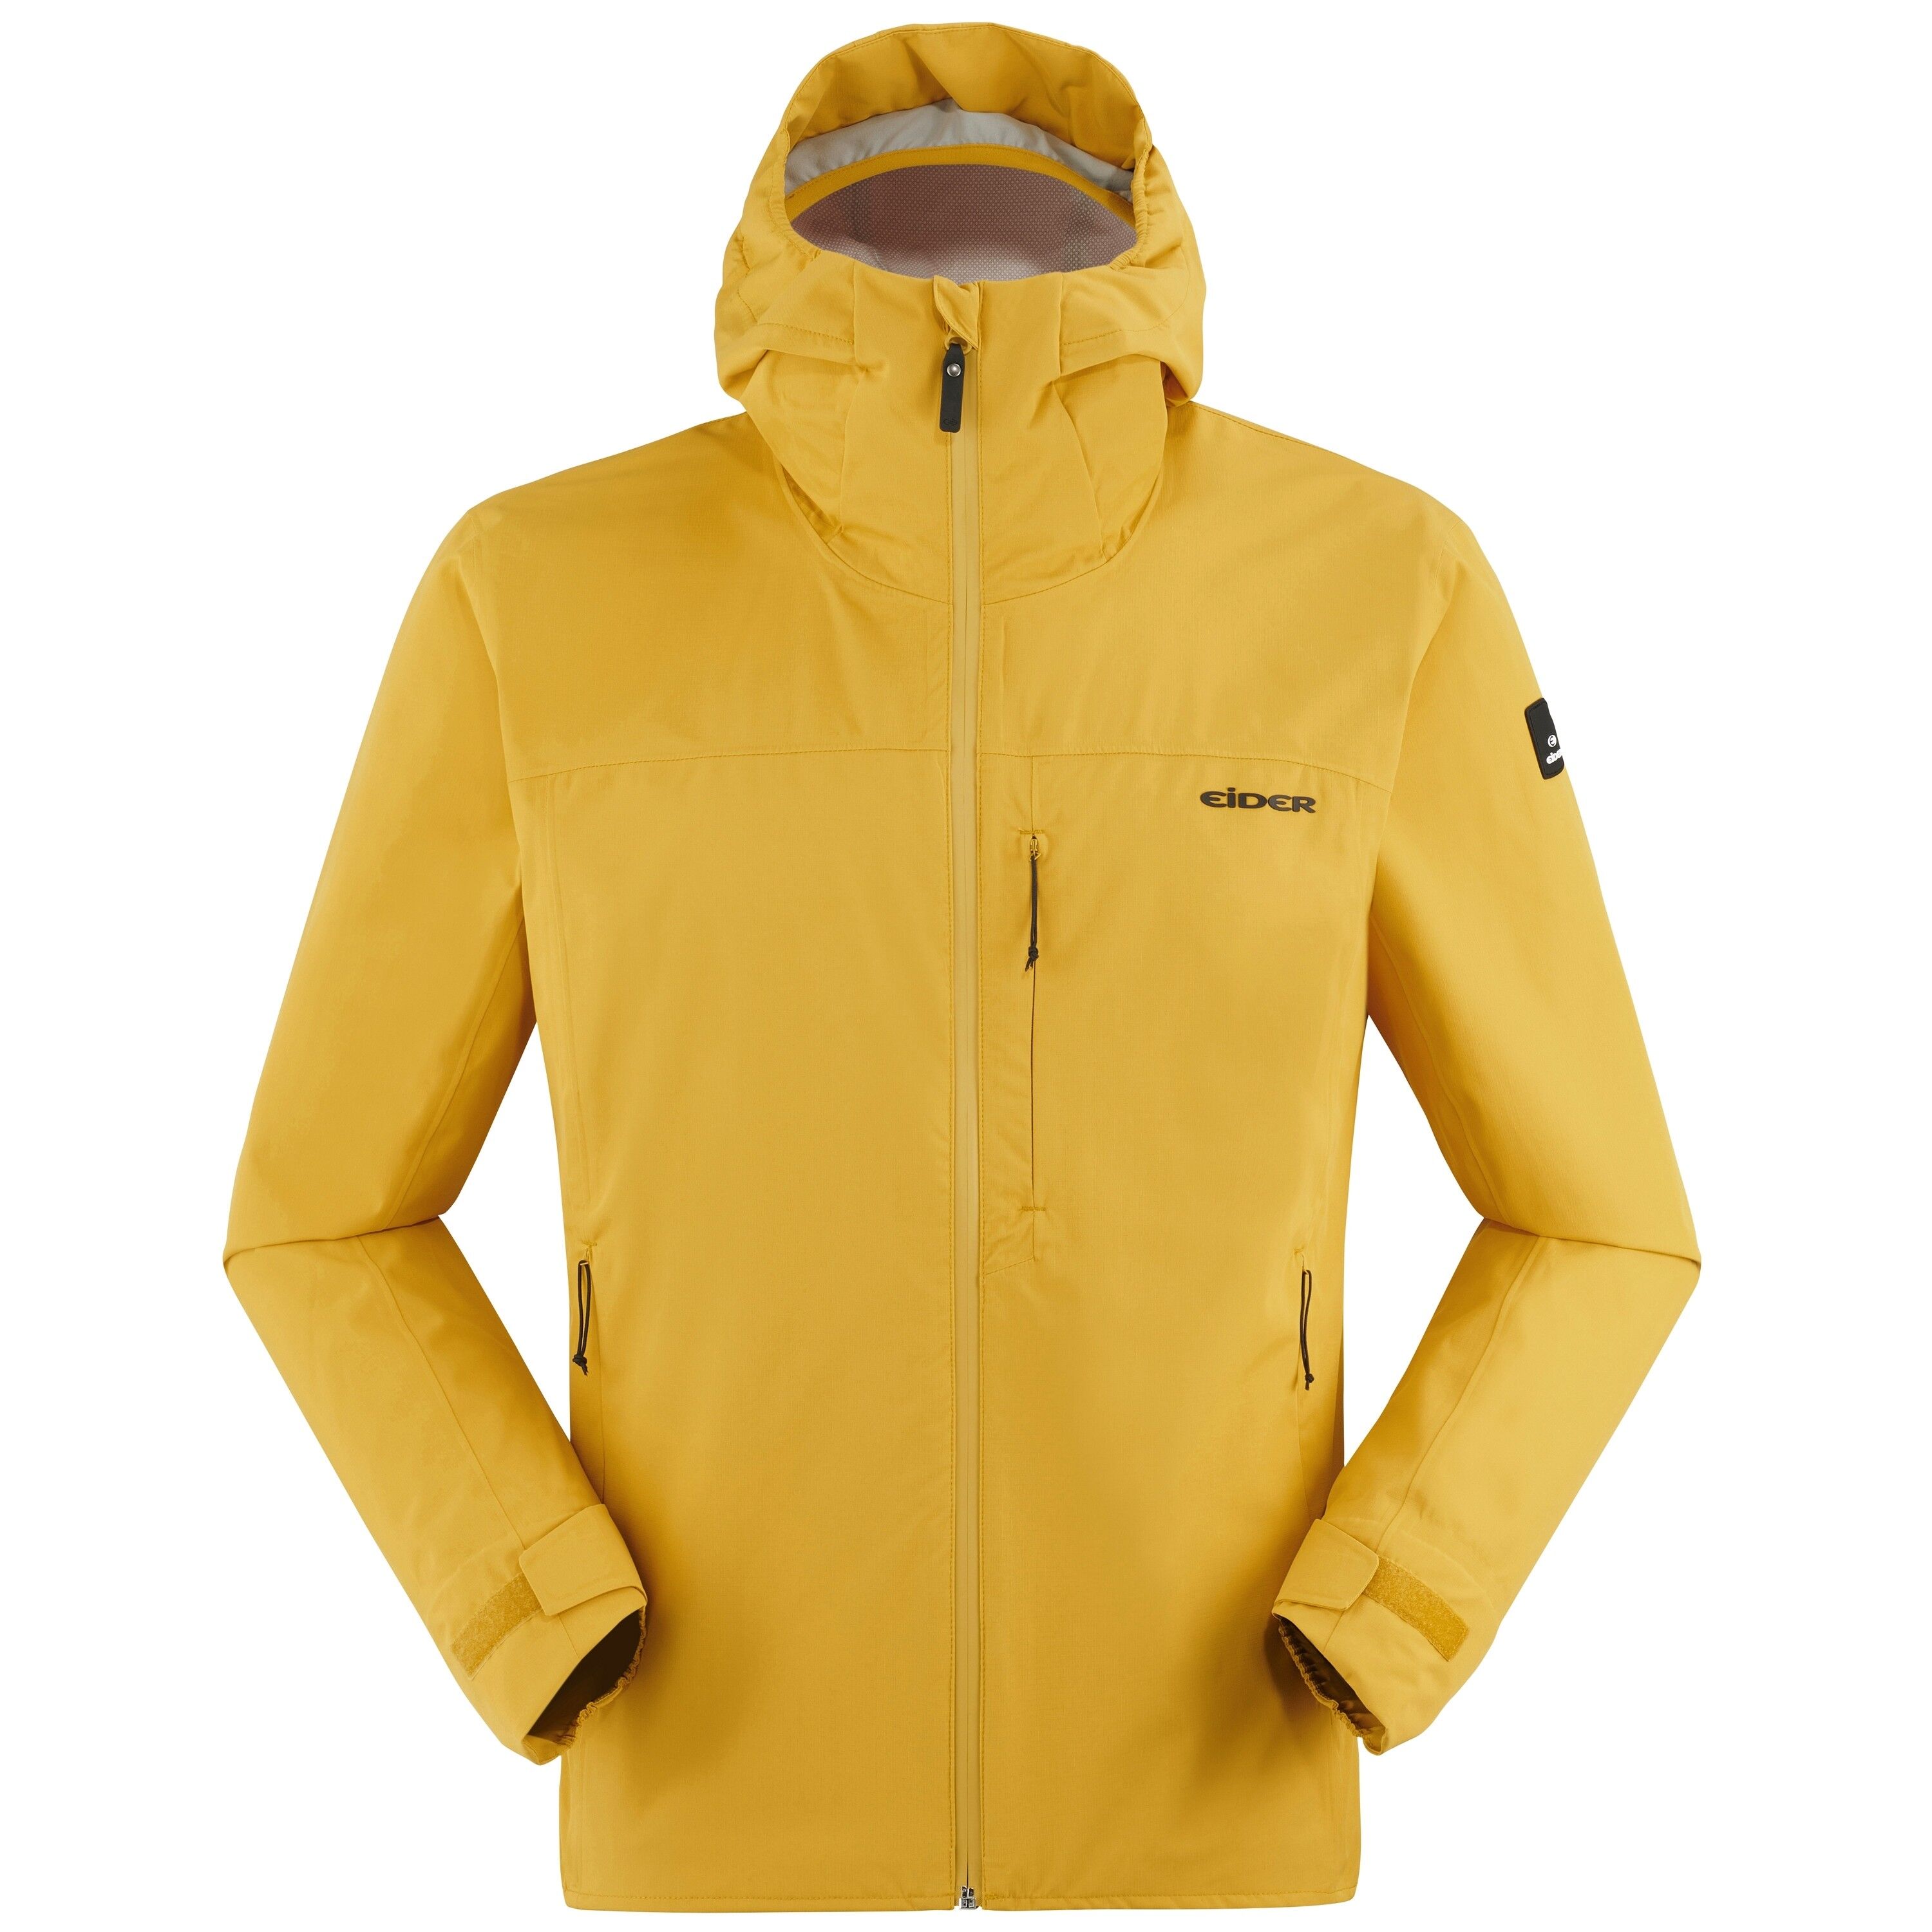 Eider Bright Jacket 2.0 - Waterproof jacket - Men's